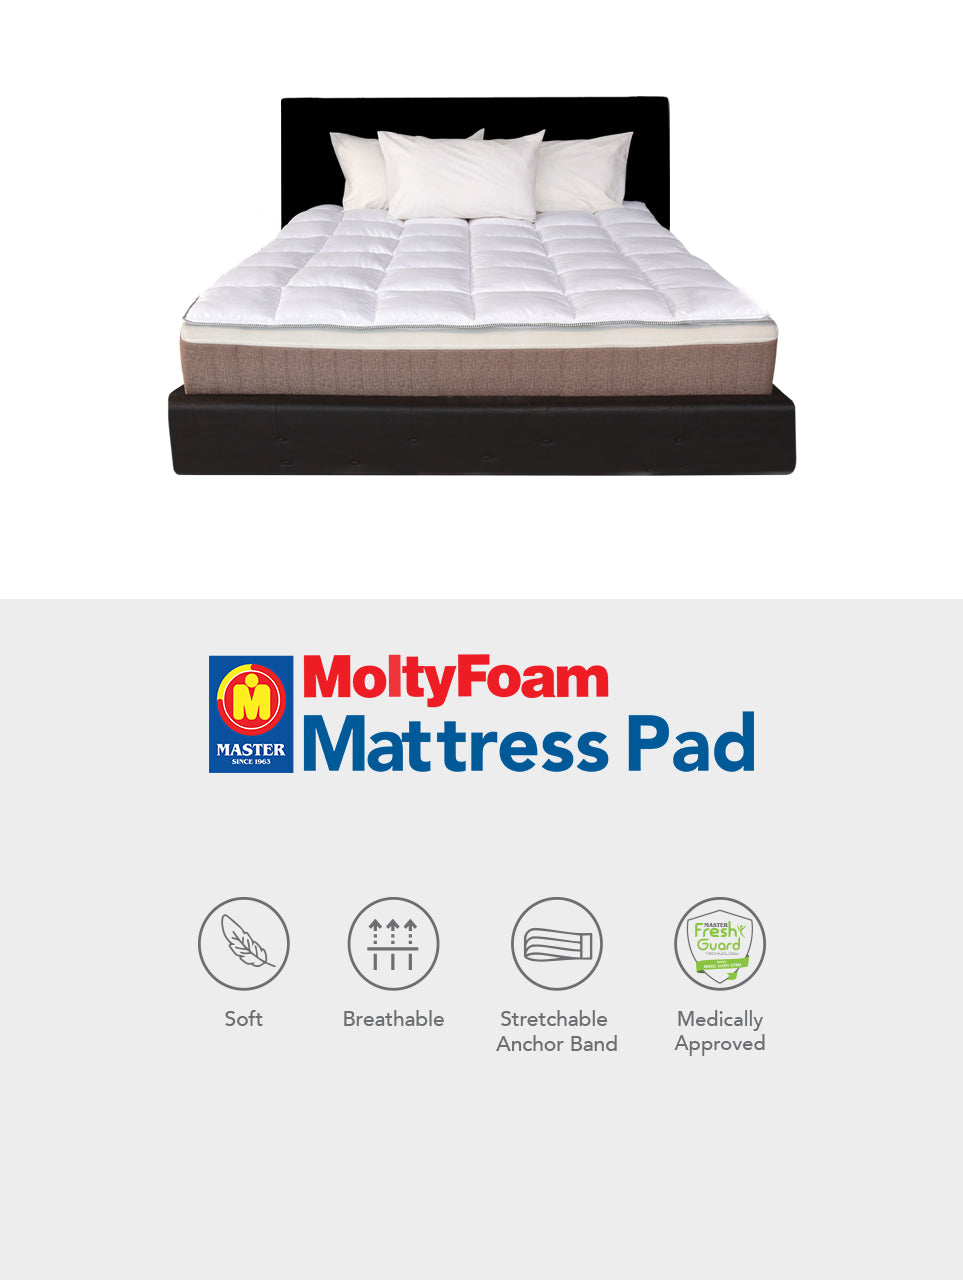 Mattress Pad– Master MoltyFoam